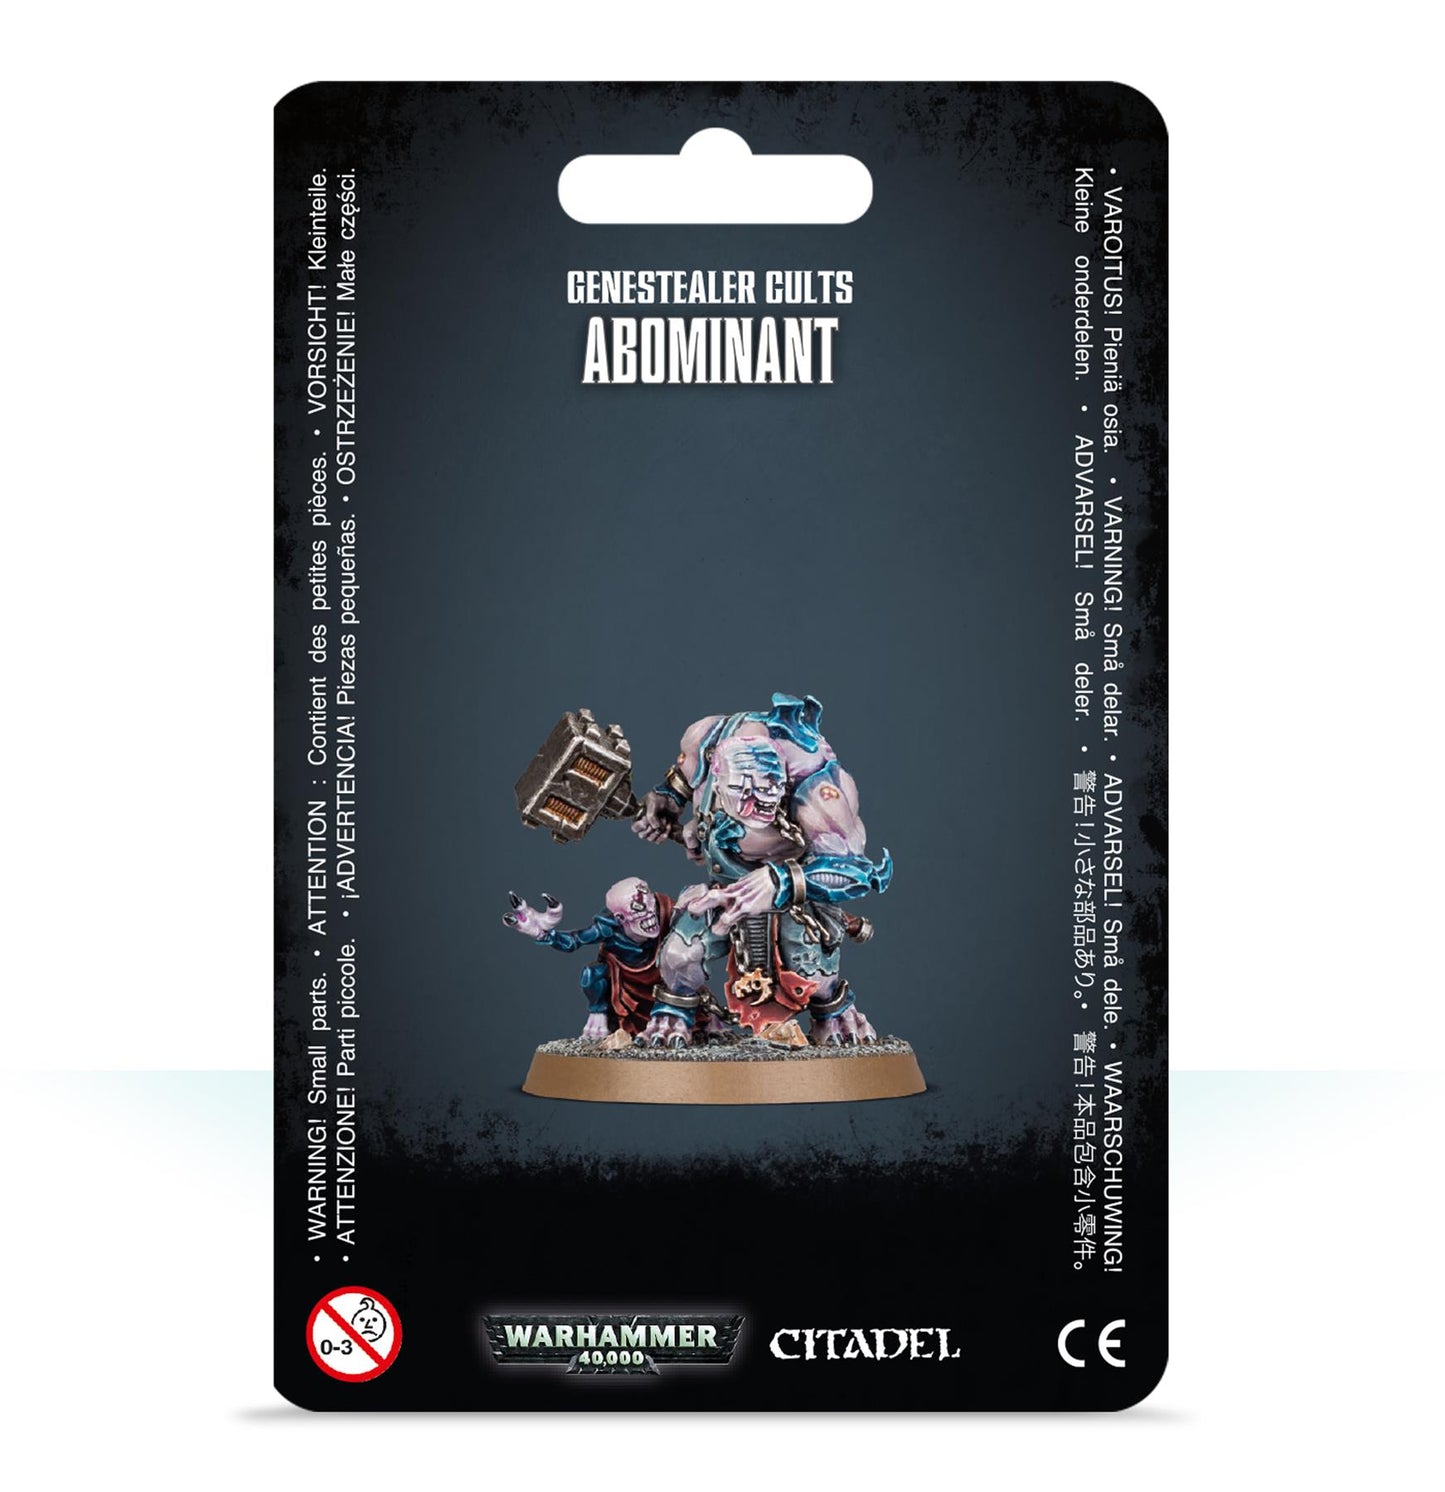 Abominant - Genestealer Cults - Warhammer 40k